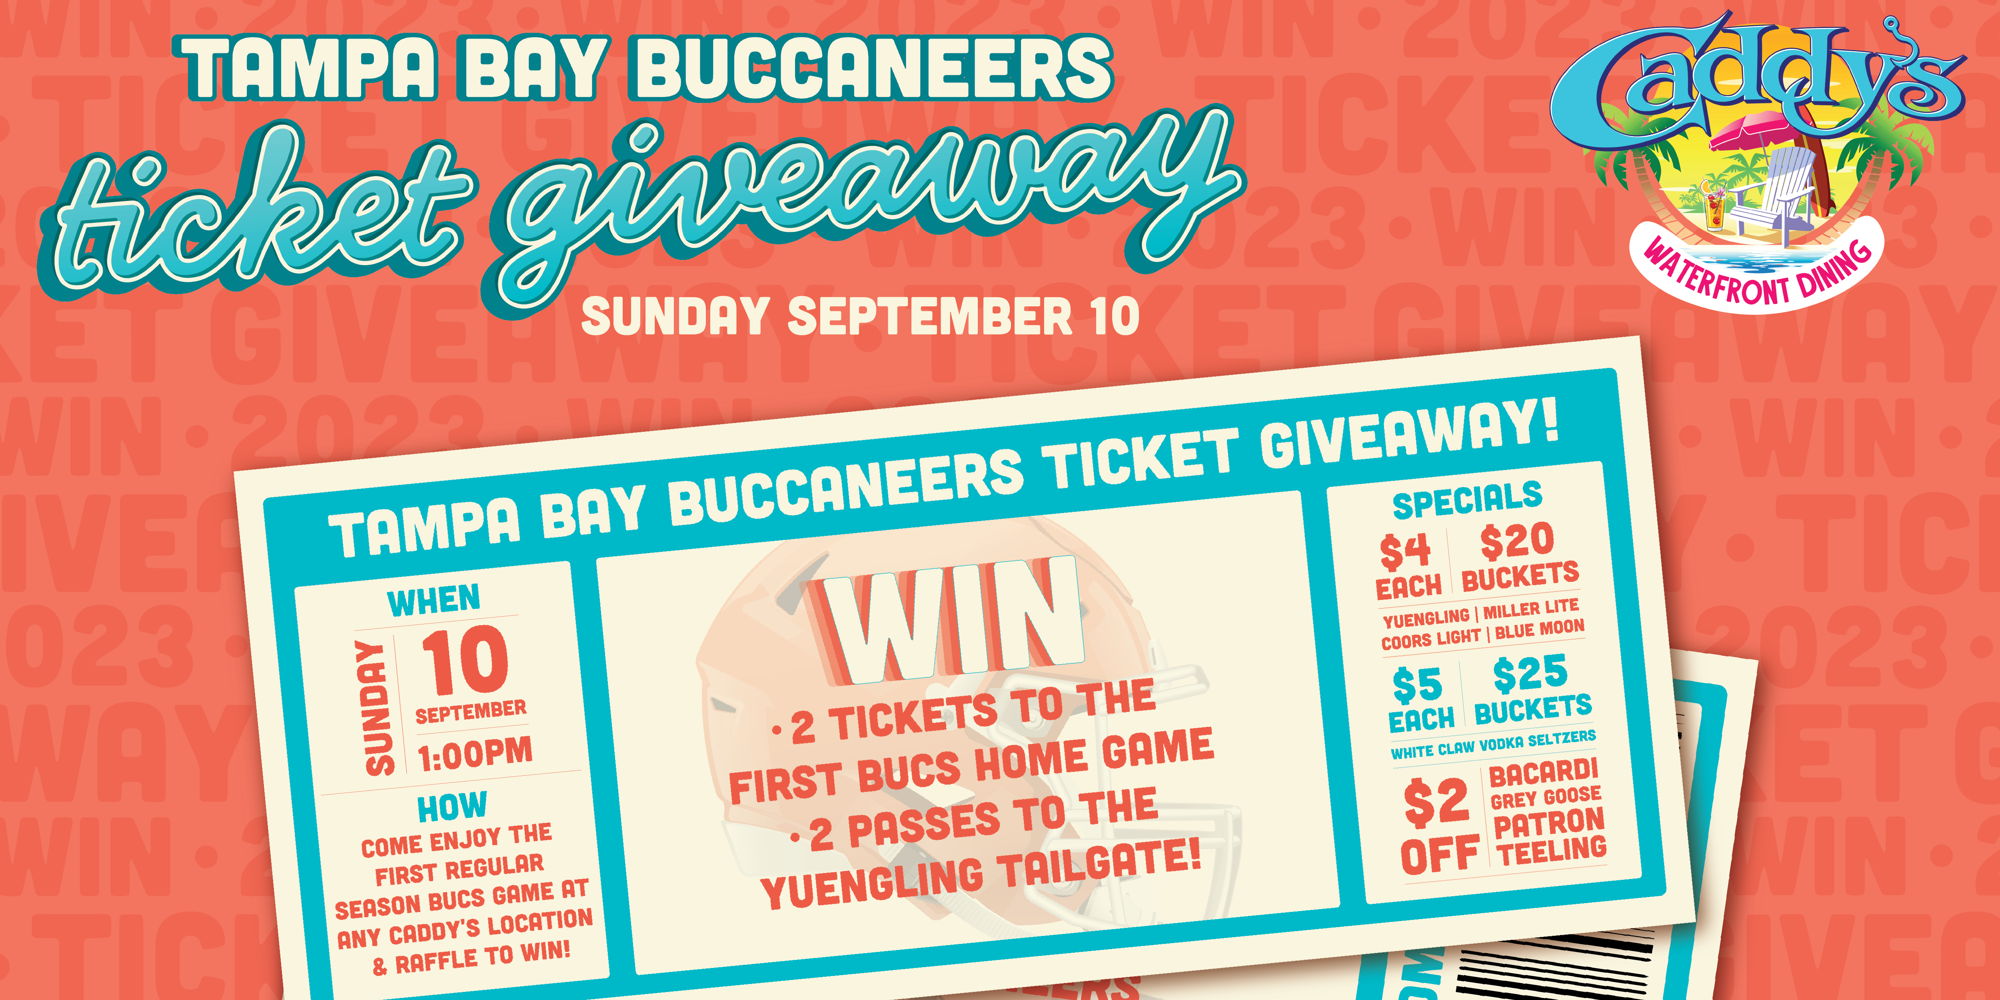 Tampa Bay Buccaneers Ticket Giveaway! promotional image